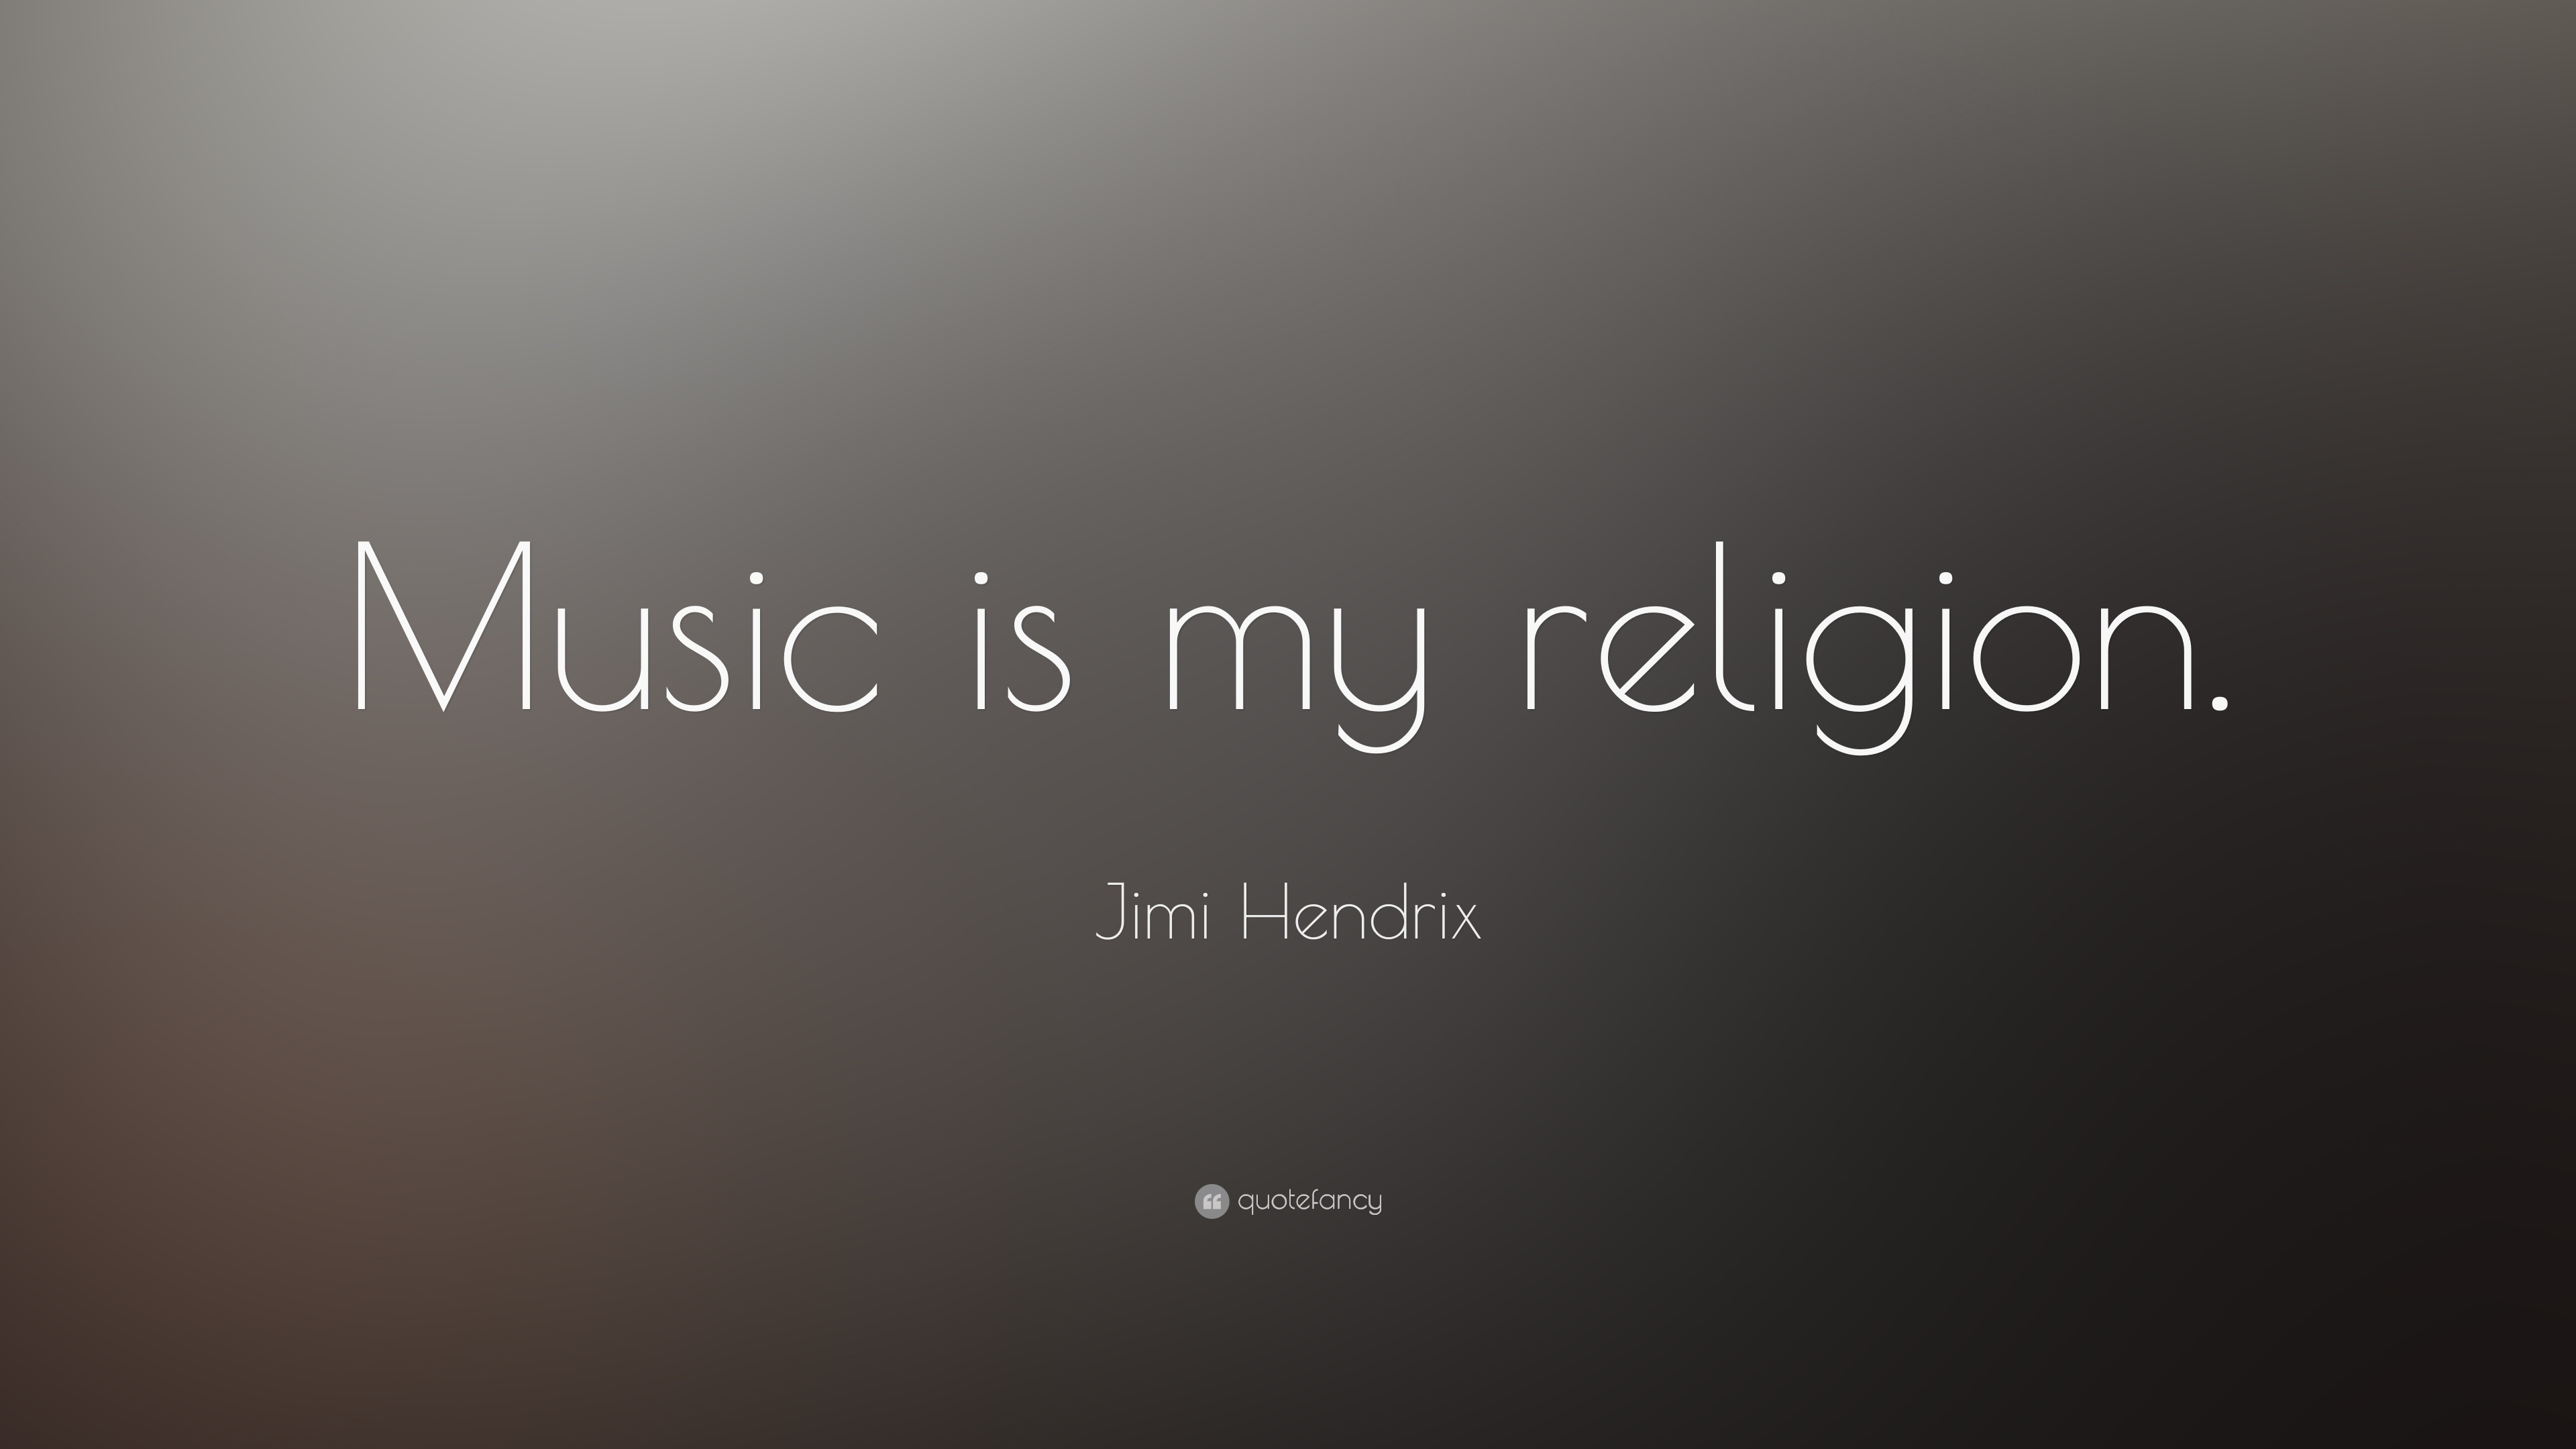 Music is my religion. Jimi Hendrix